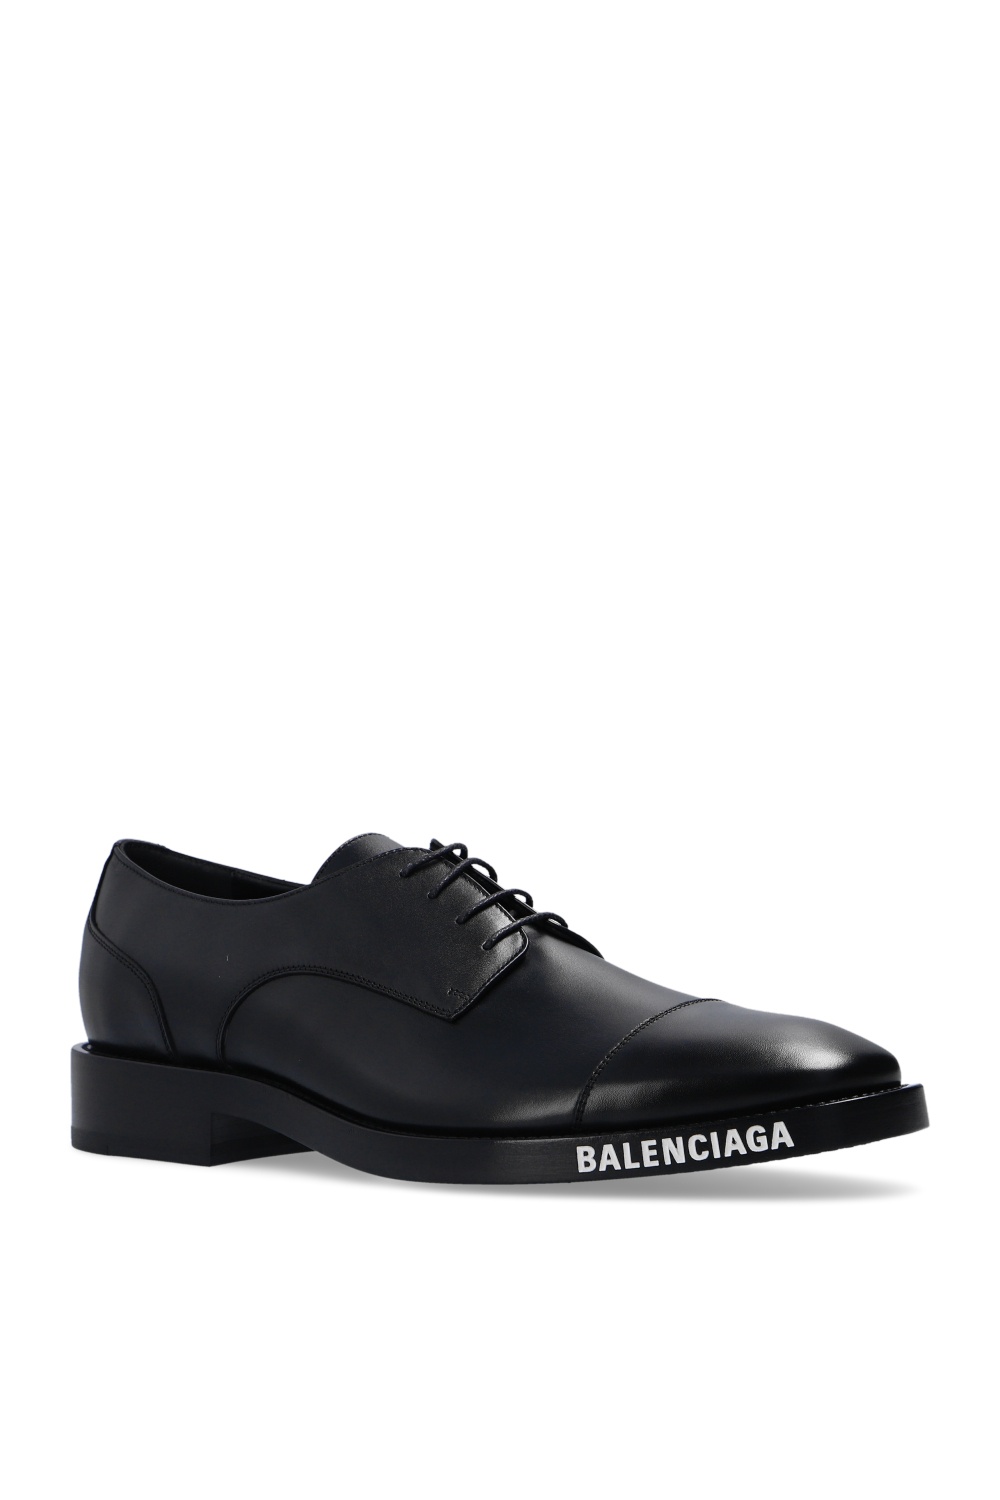 Balenciaga E115750D With wedge sandals